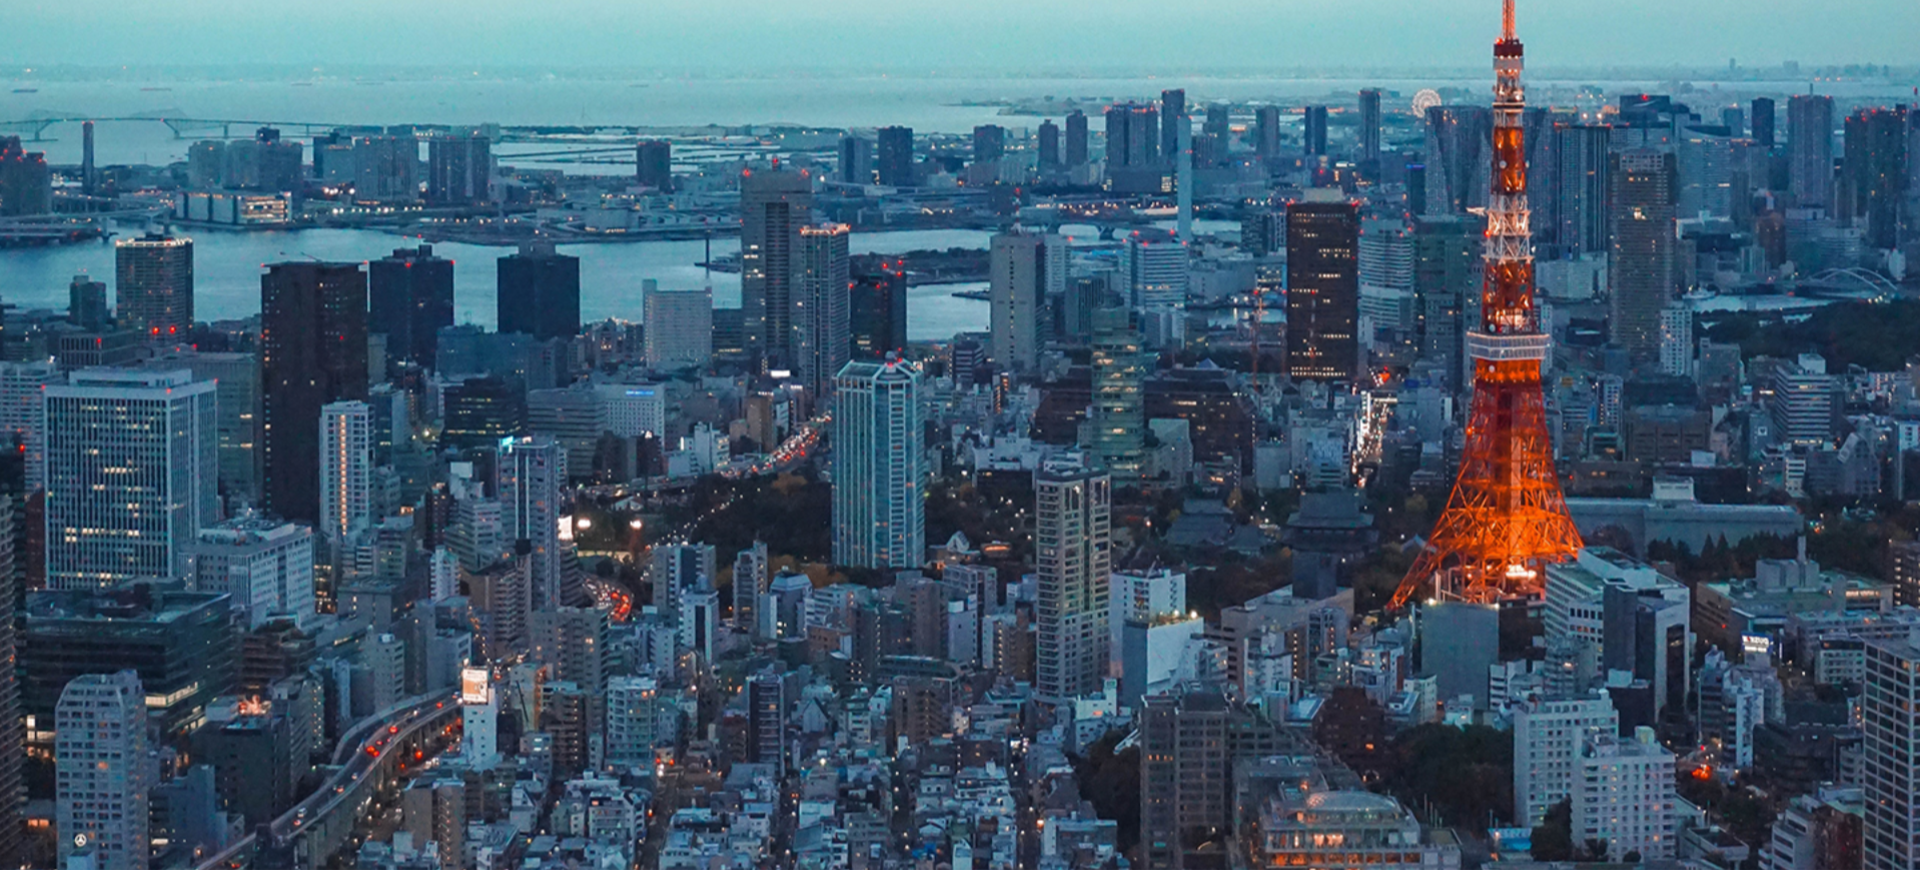 Background of Tokyo skyline